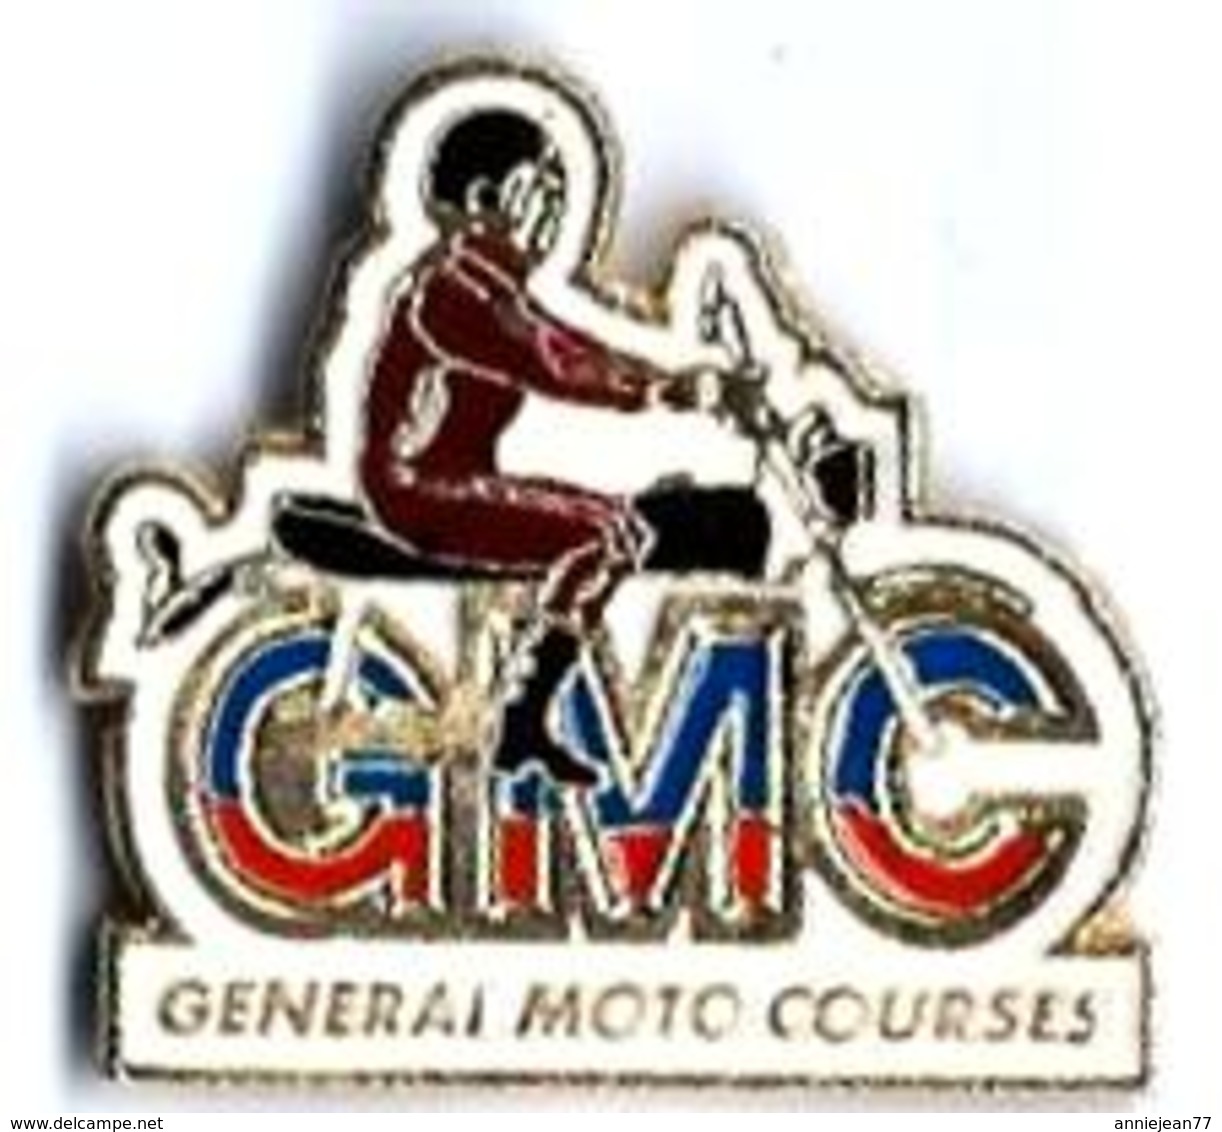 MOTOS - M2 - GMC - GENERAL MOTO COURSES - Verso : SUPPE - Moto